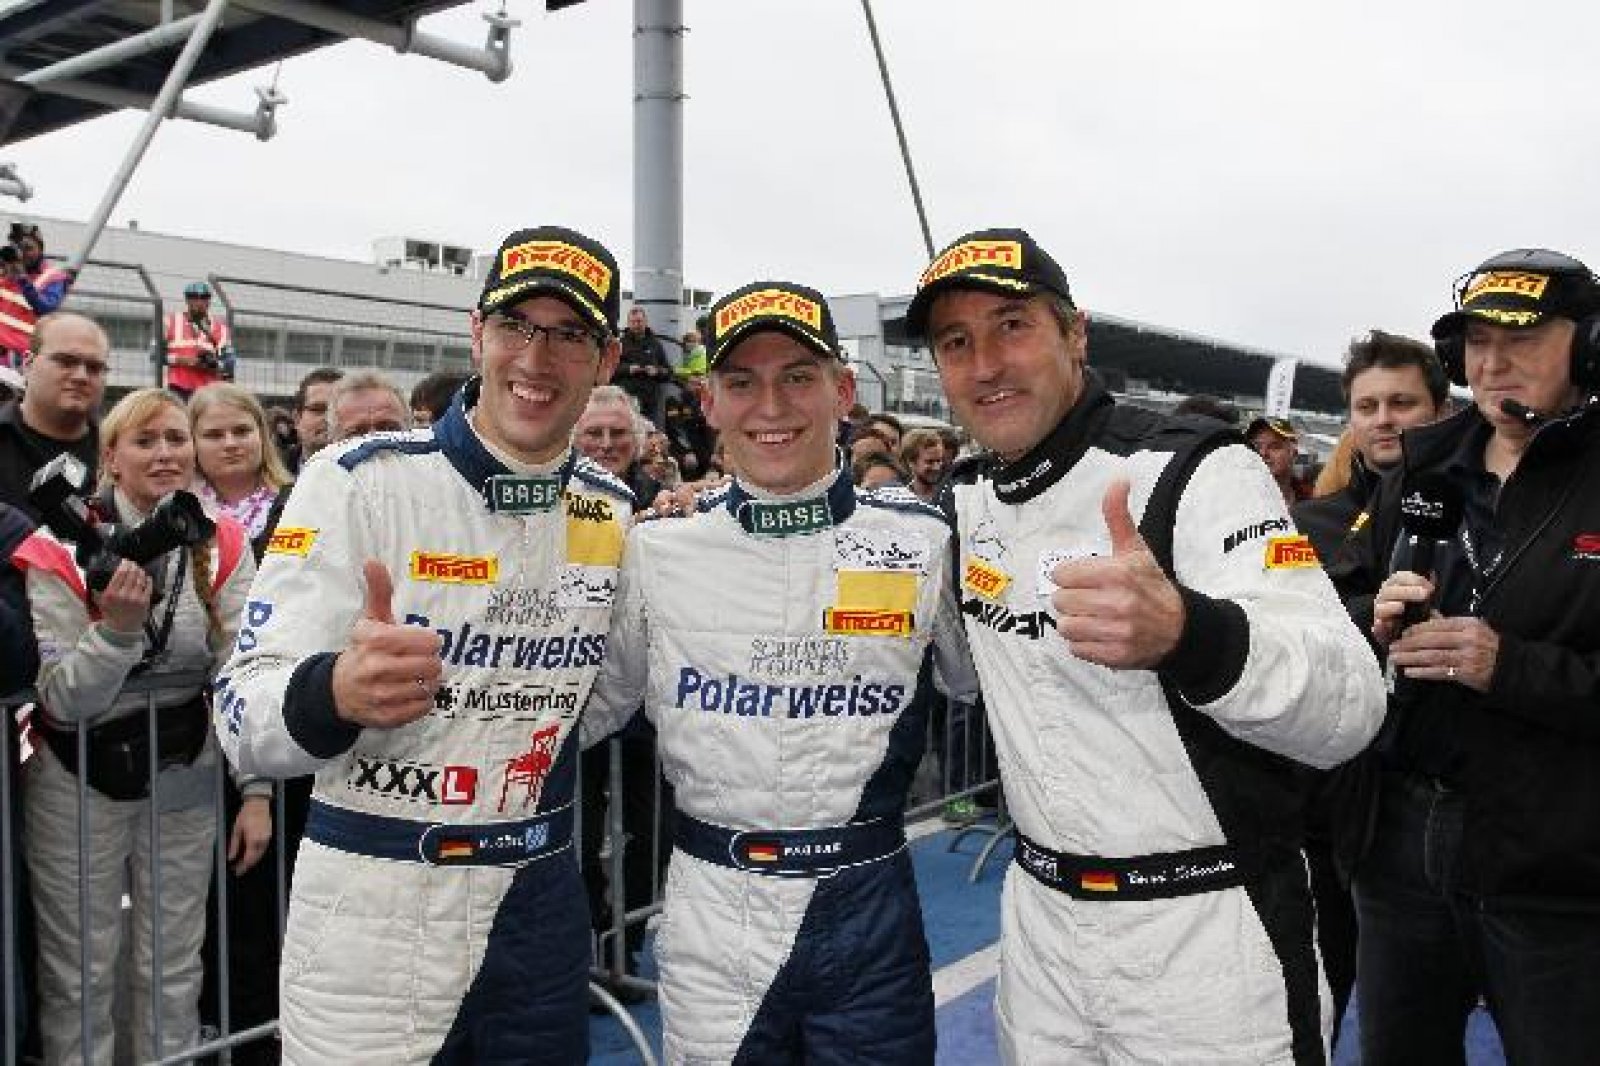 2013 Champions crowned at Nurburgring